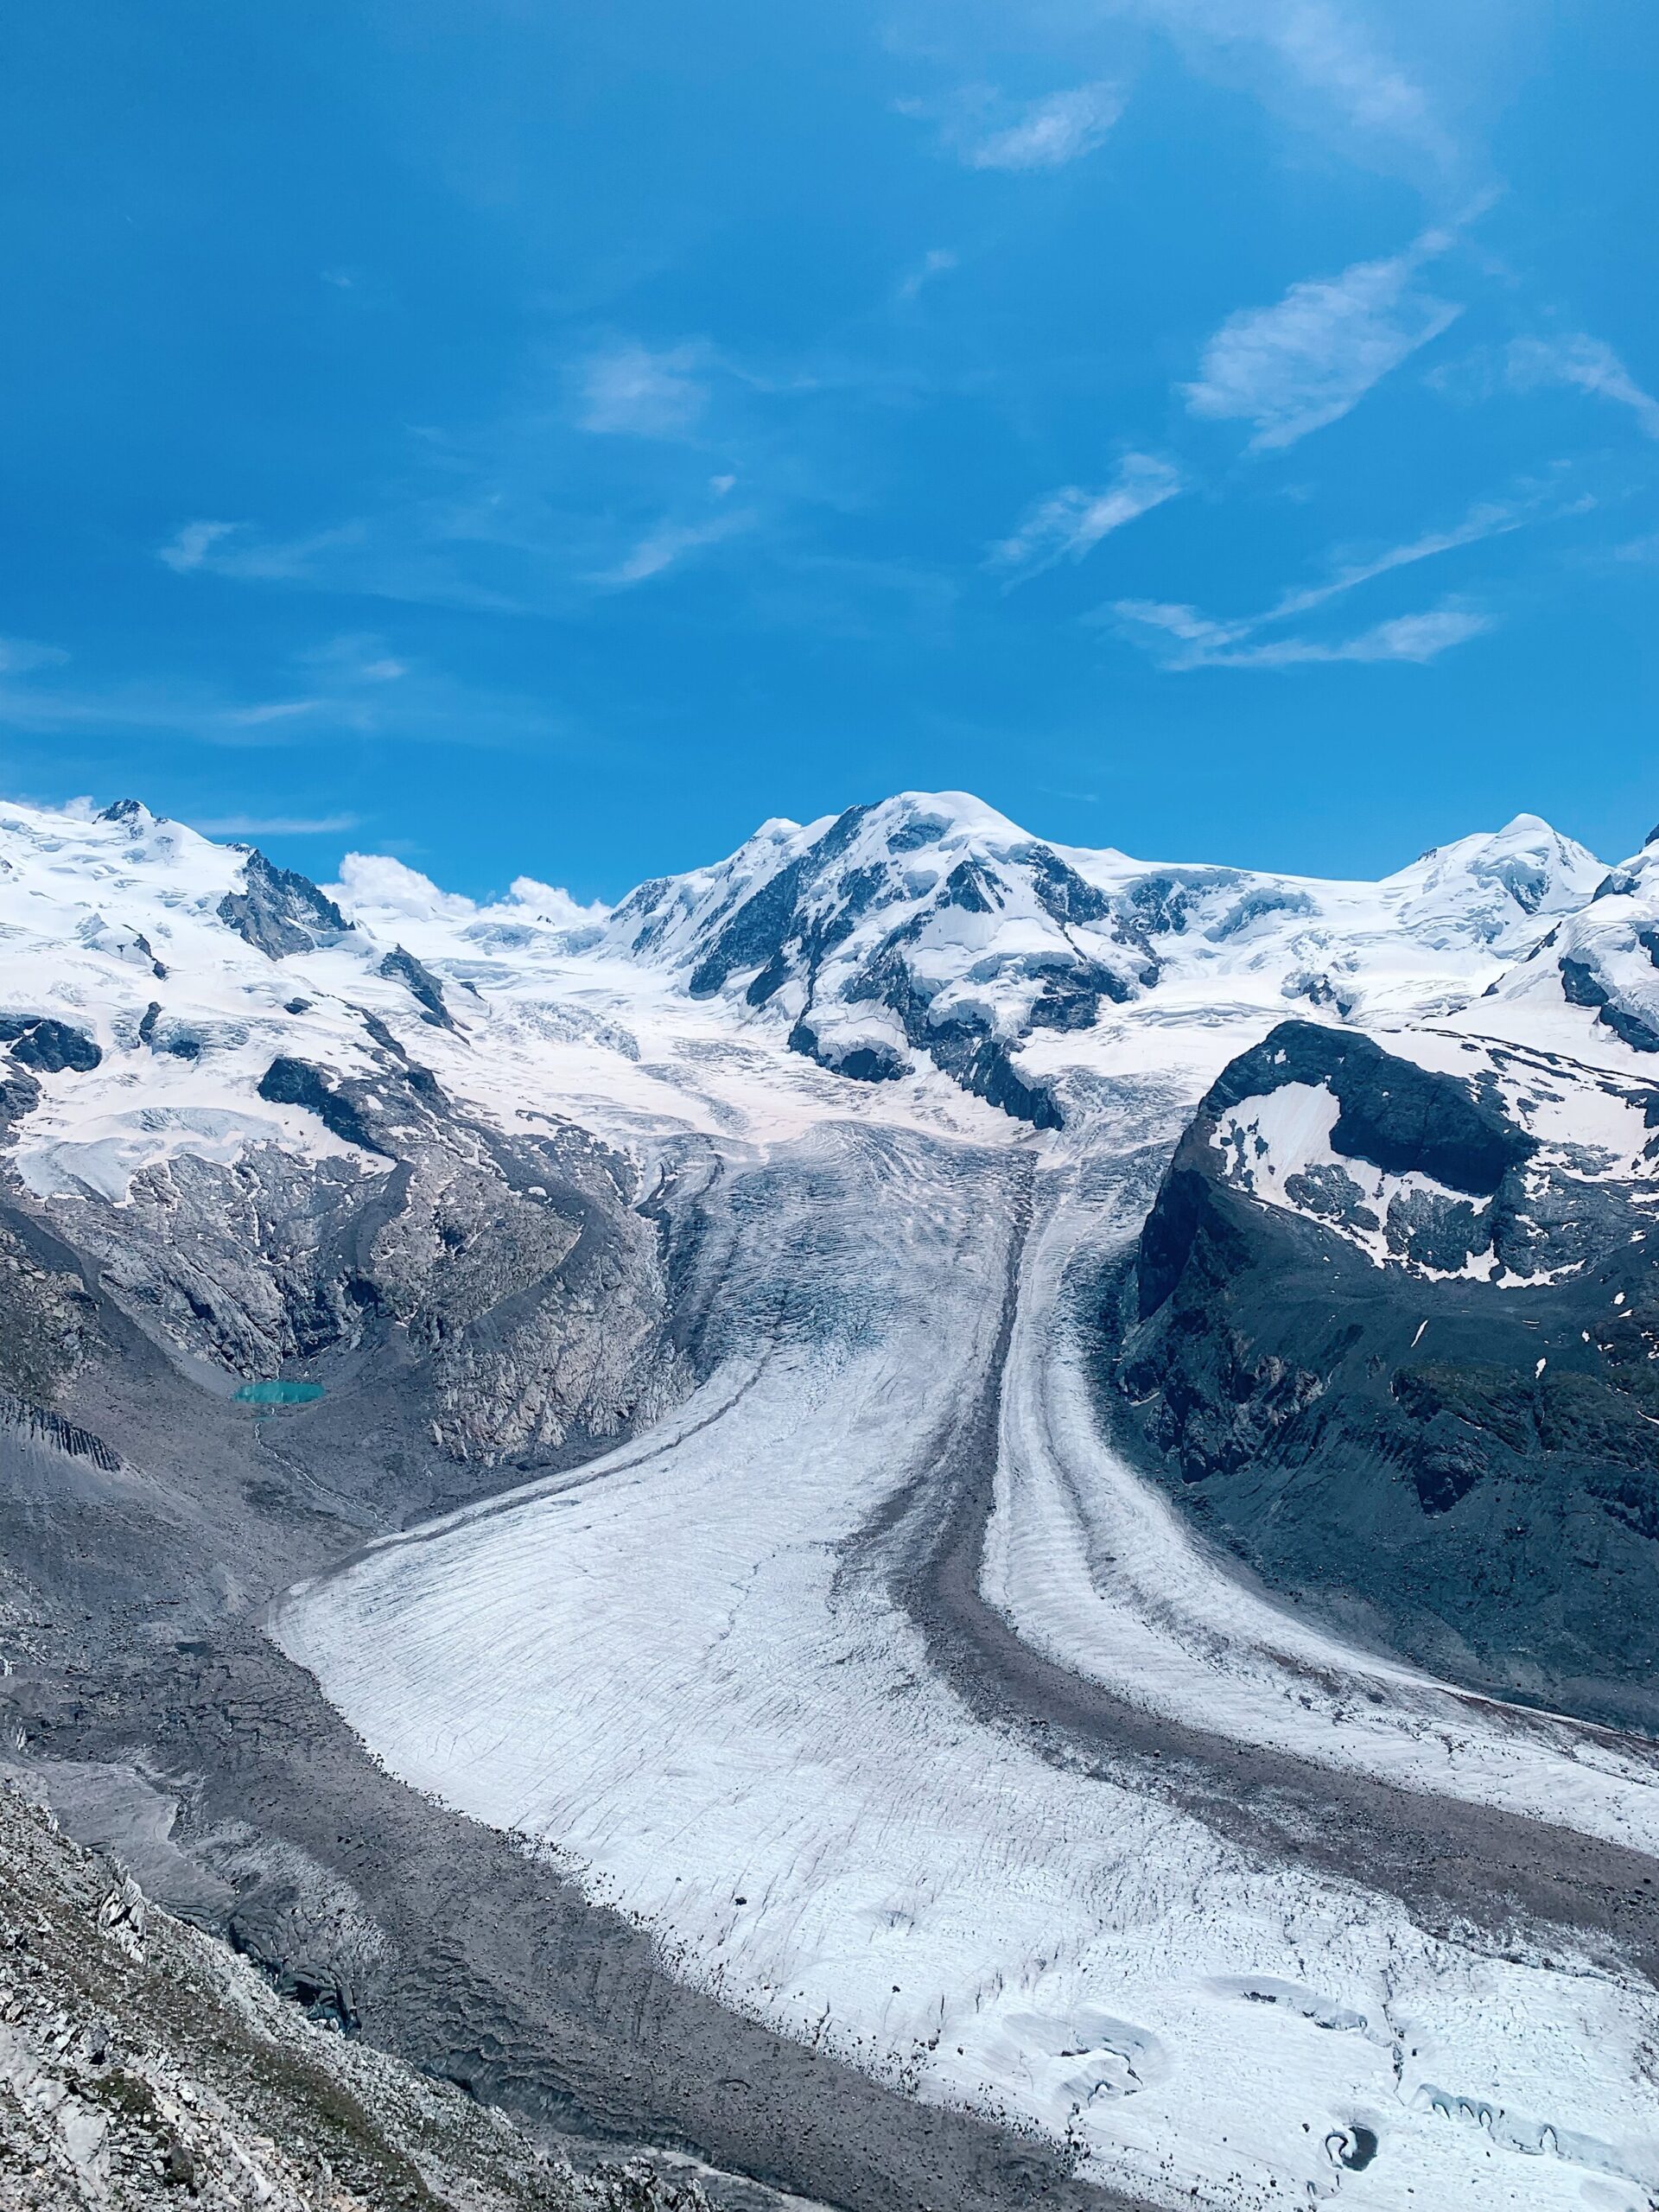 The Gorner Glacier south-east of Zermatt.